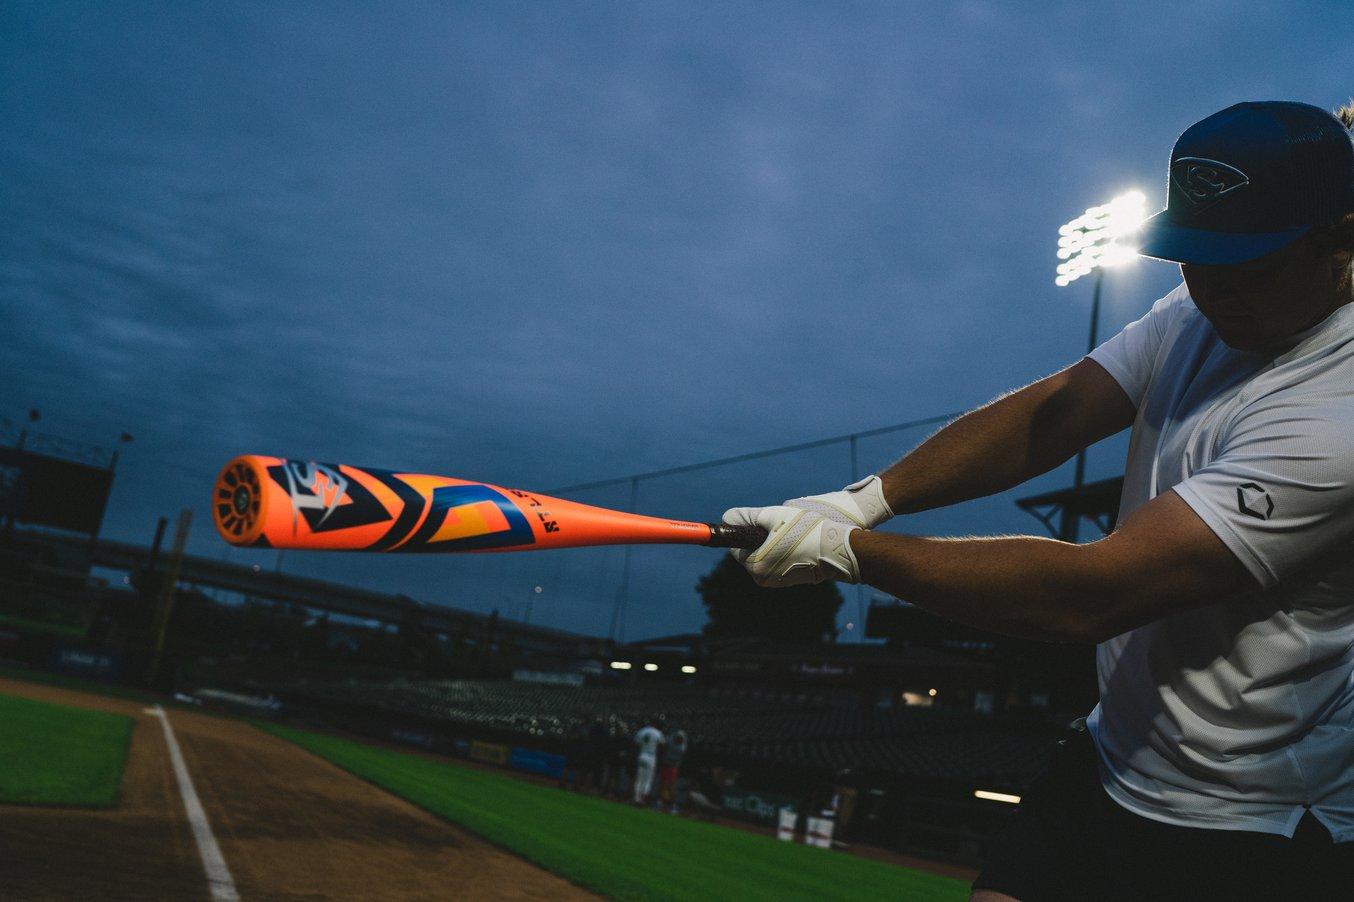 un joueur de baseball balance une batte de baseball orange sur un terrain de baseball